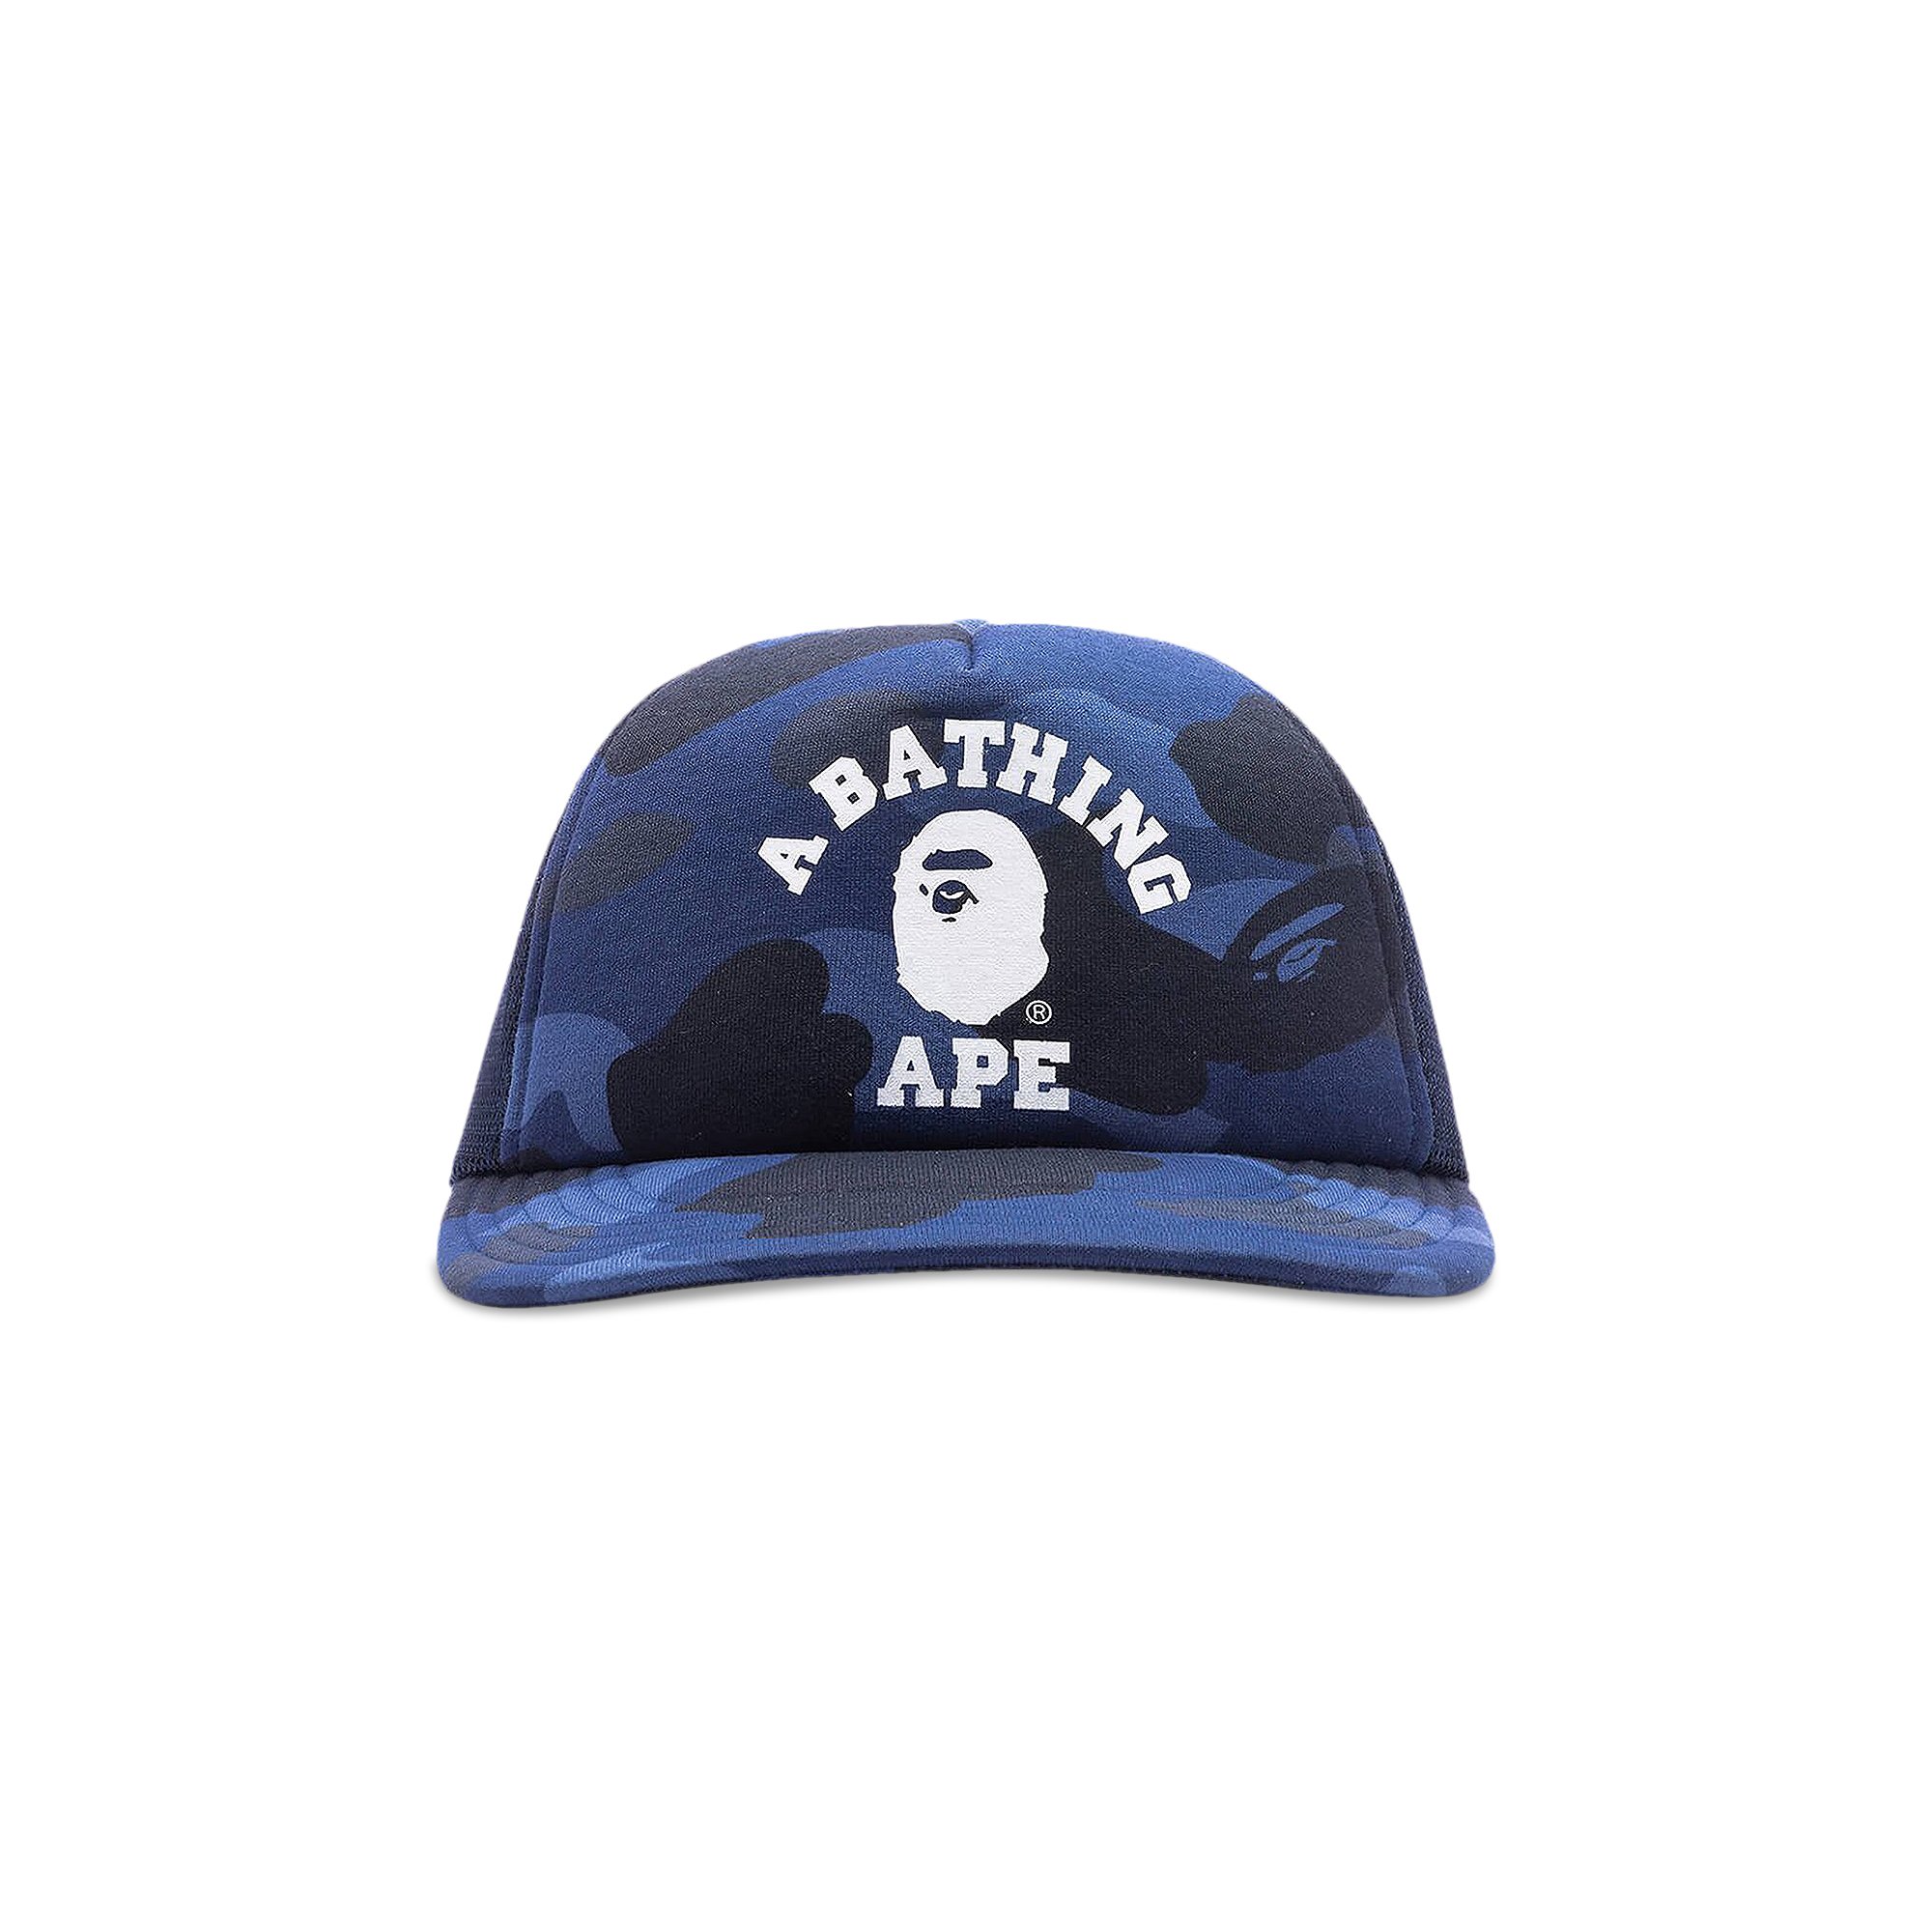 Сетчатая кепка колледжа BAPE Color Camo, темно-синяя сетчатая кепка колледжа bape color camo темно синяя